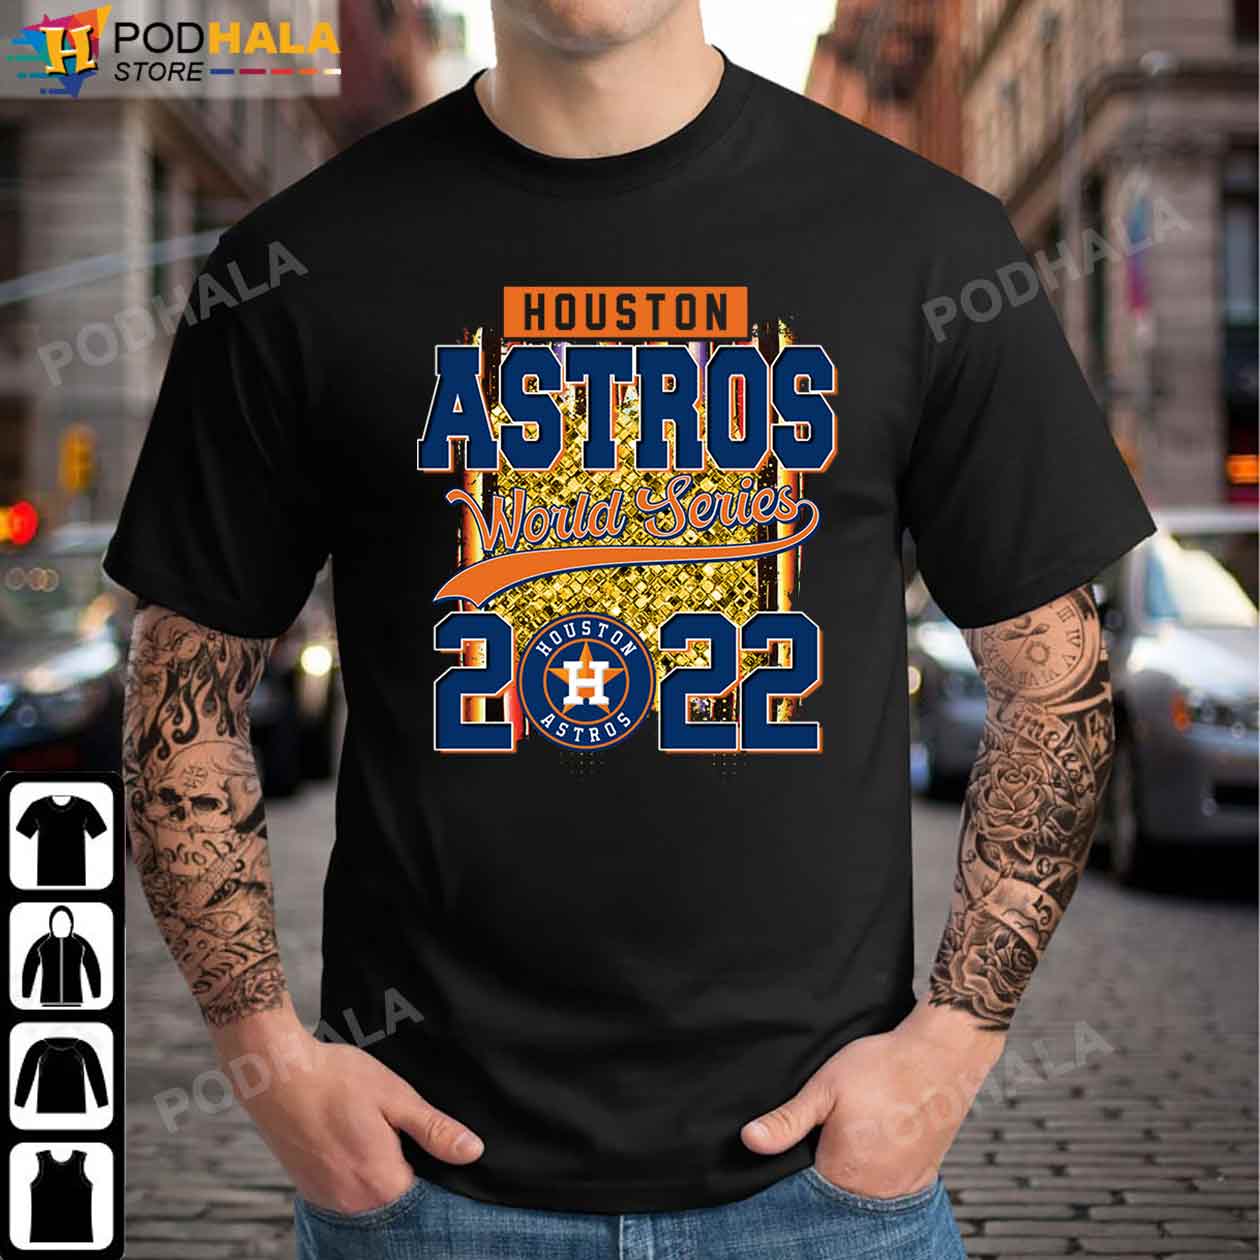 astros funny shirts